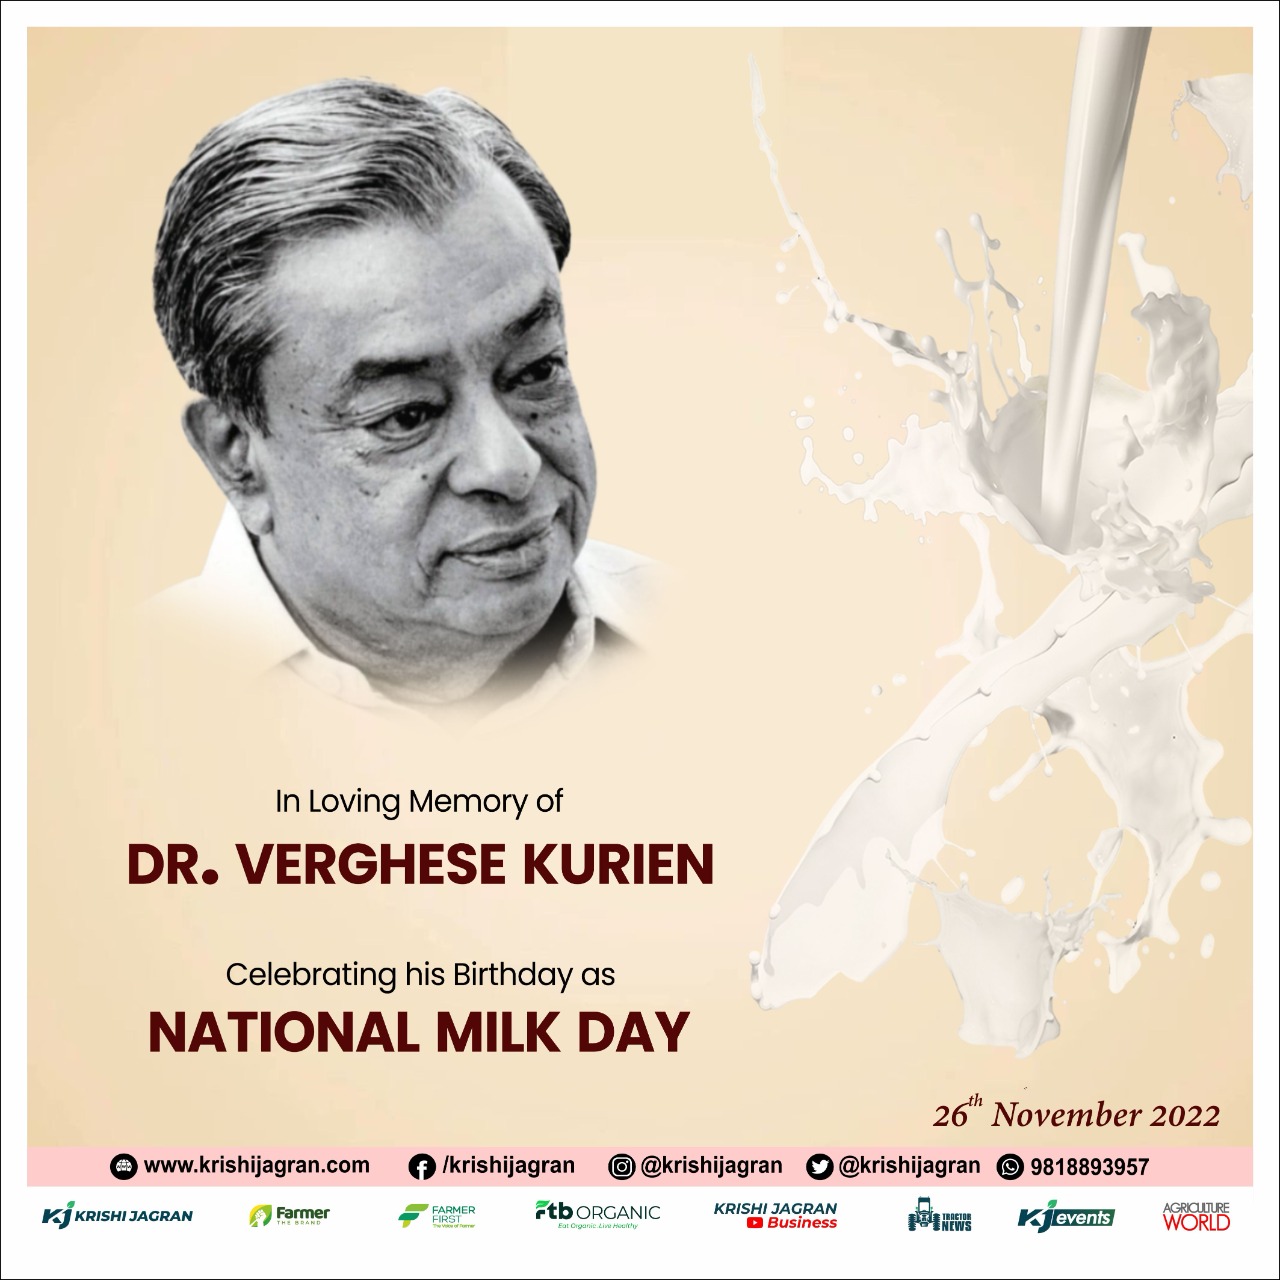 National Milk Day: